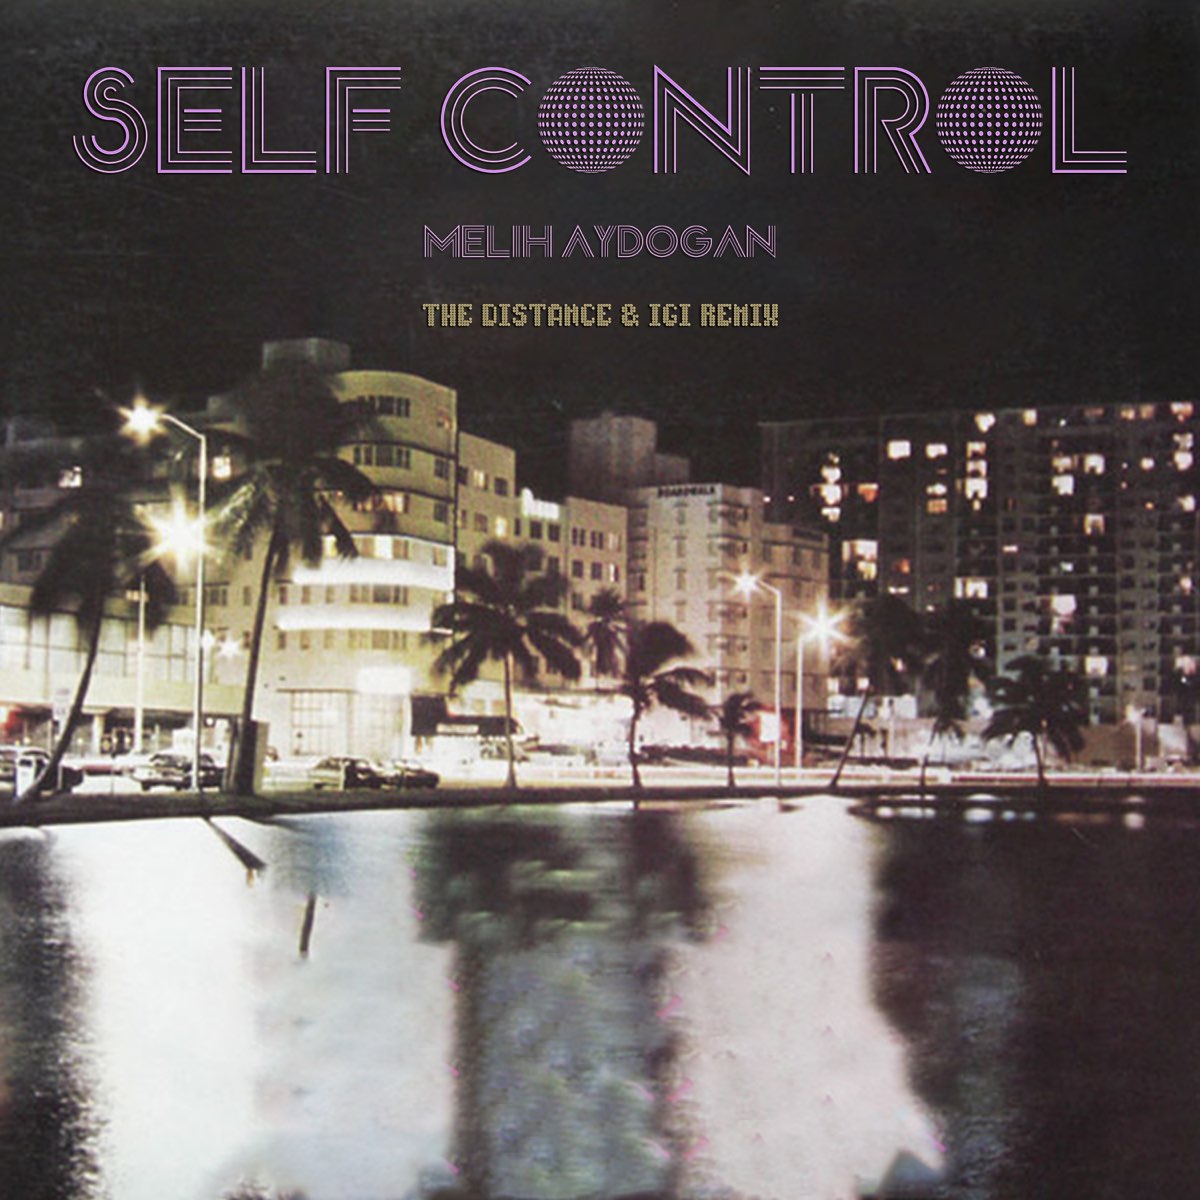 Self control remix. The distance & IGI. Self Control. Melih Aydogan, the distance, IGI feat. Bensu. The distance & IGI - moving Apart.